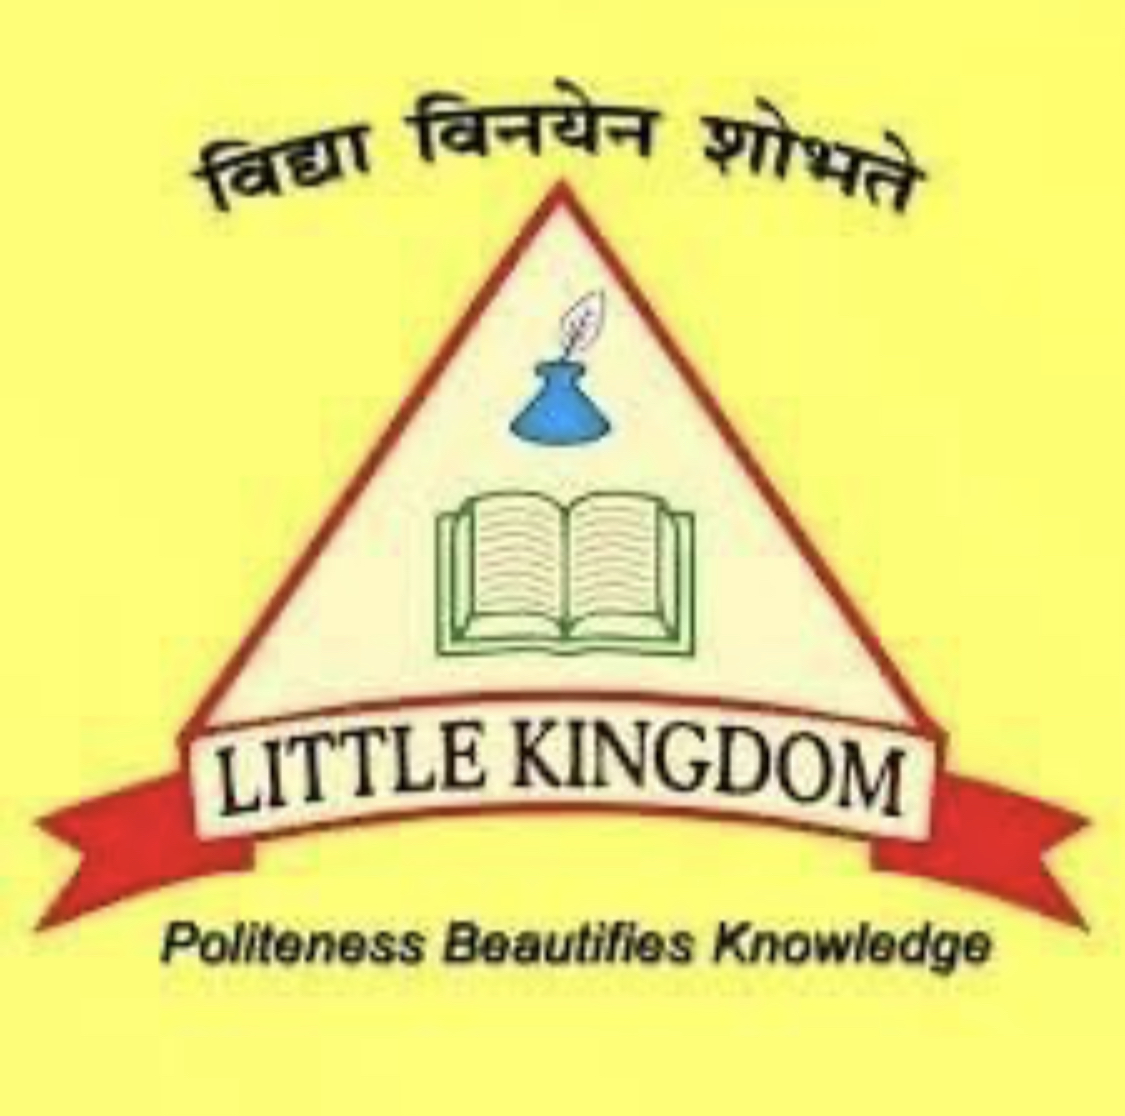 Little Kingdom Group Of Schools ( Palakk Academy ) logo